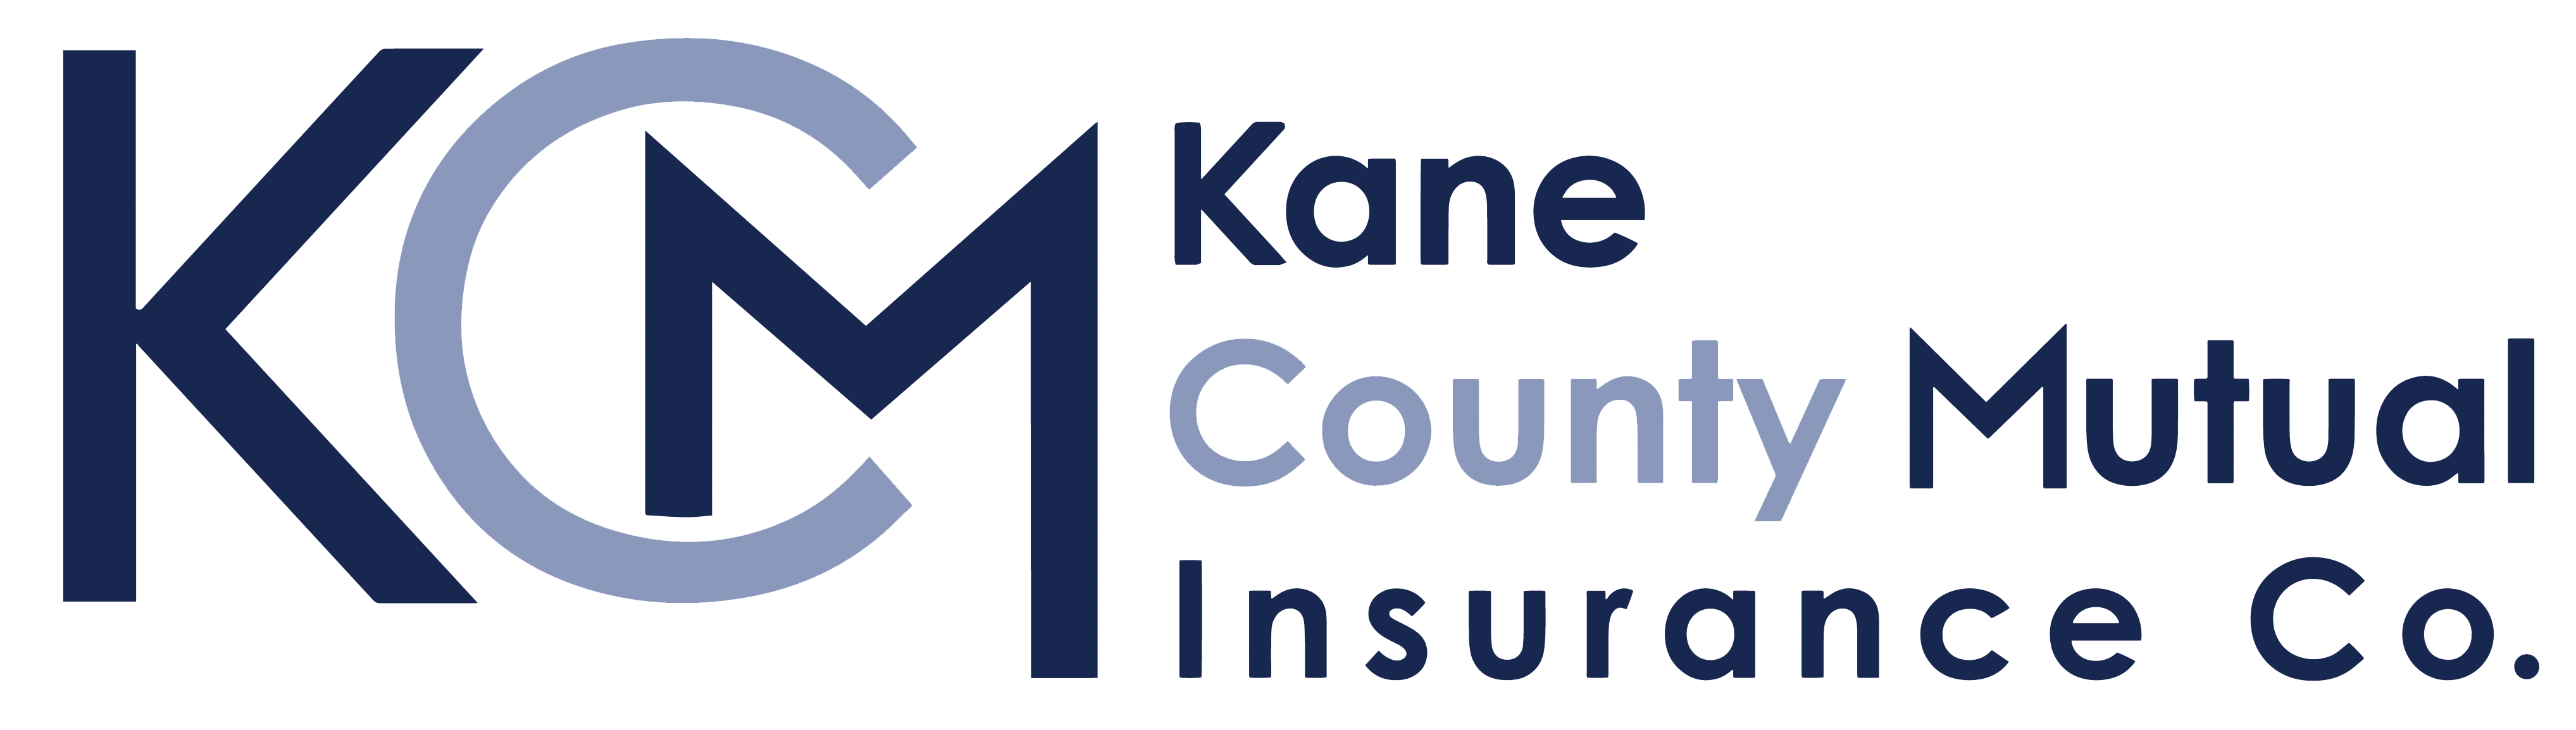 Kane County Mutual Insurance